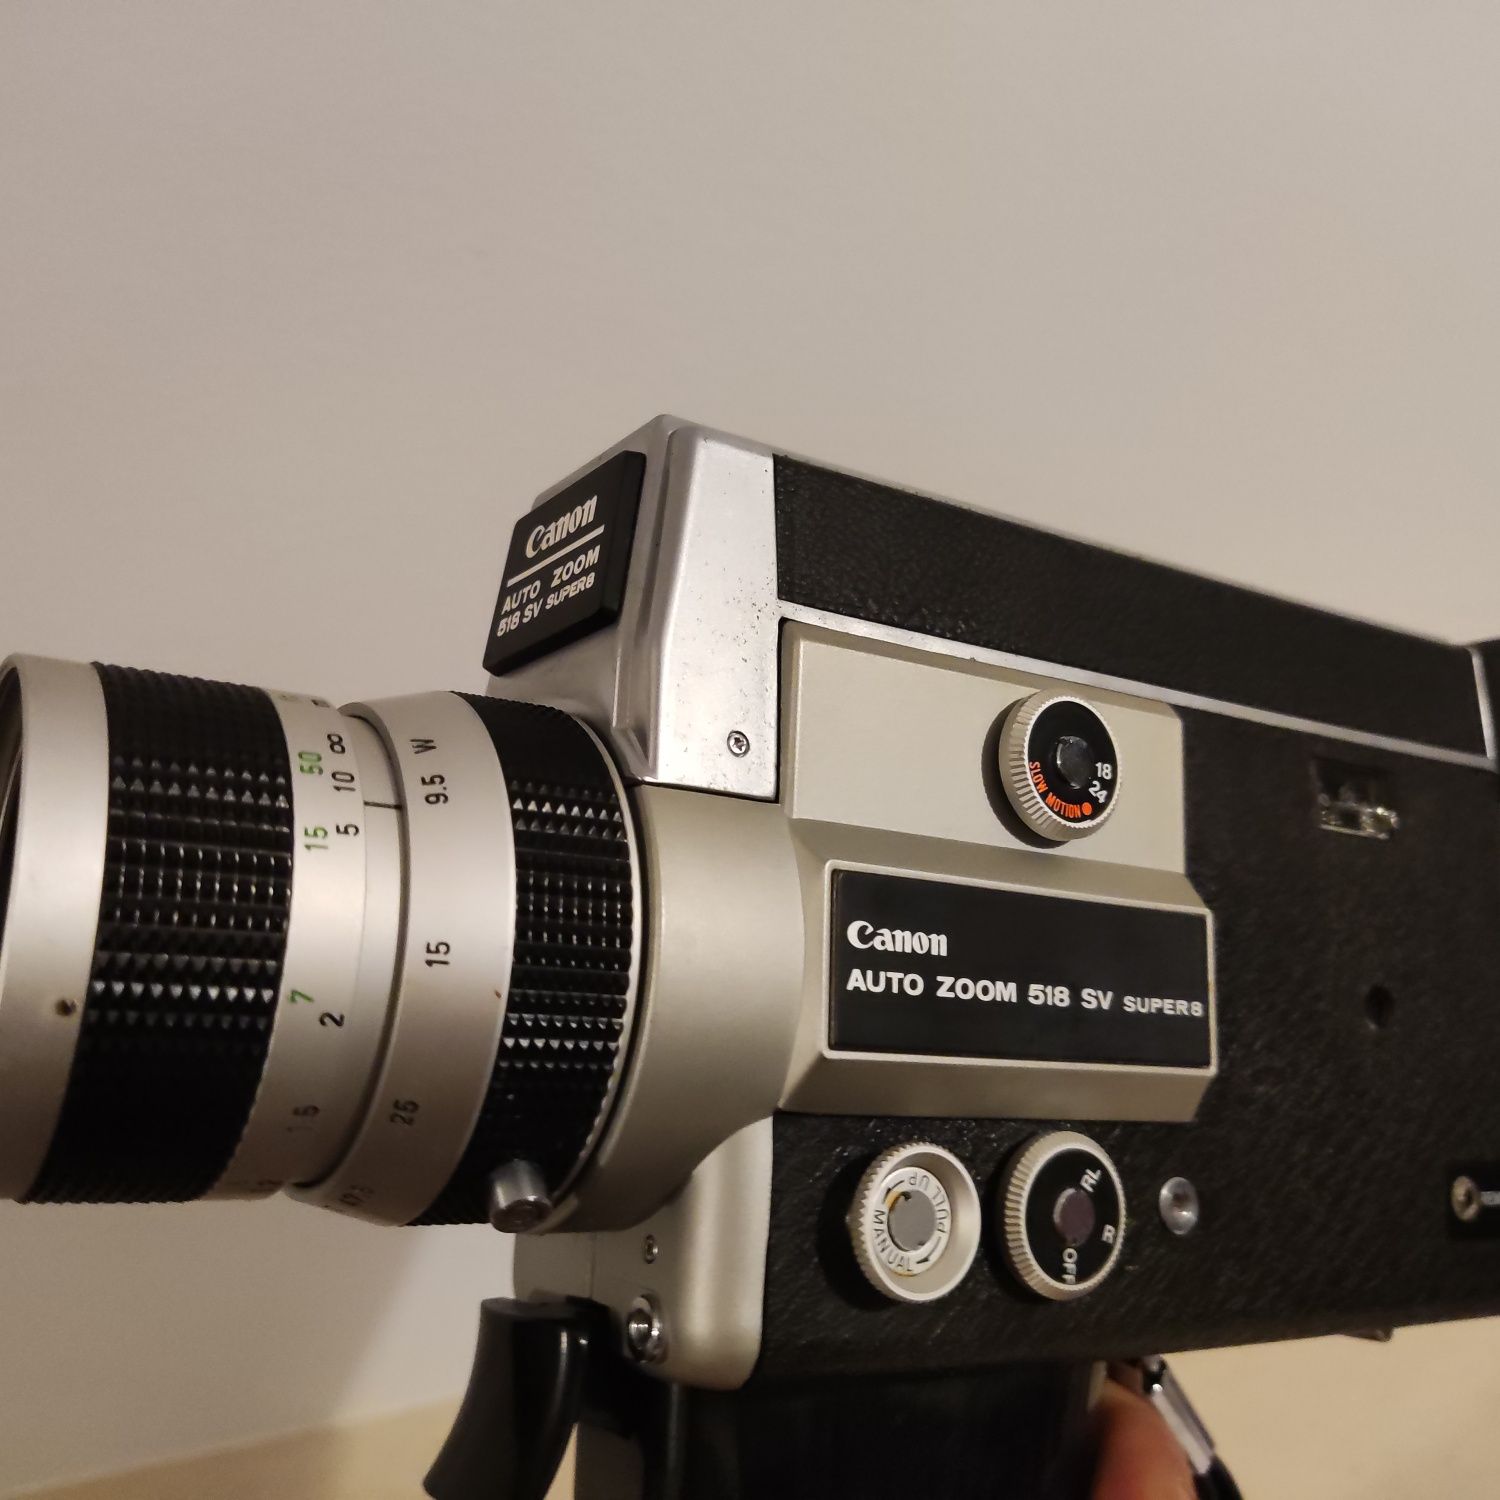 Canon Super 8 Auto Zoom 518 SV - máquina de filmar antiga (vintage)